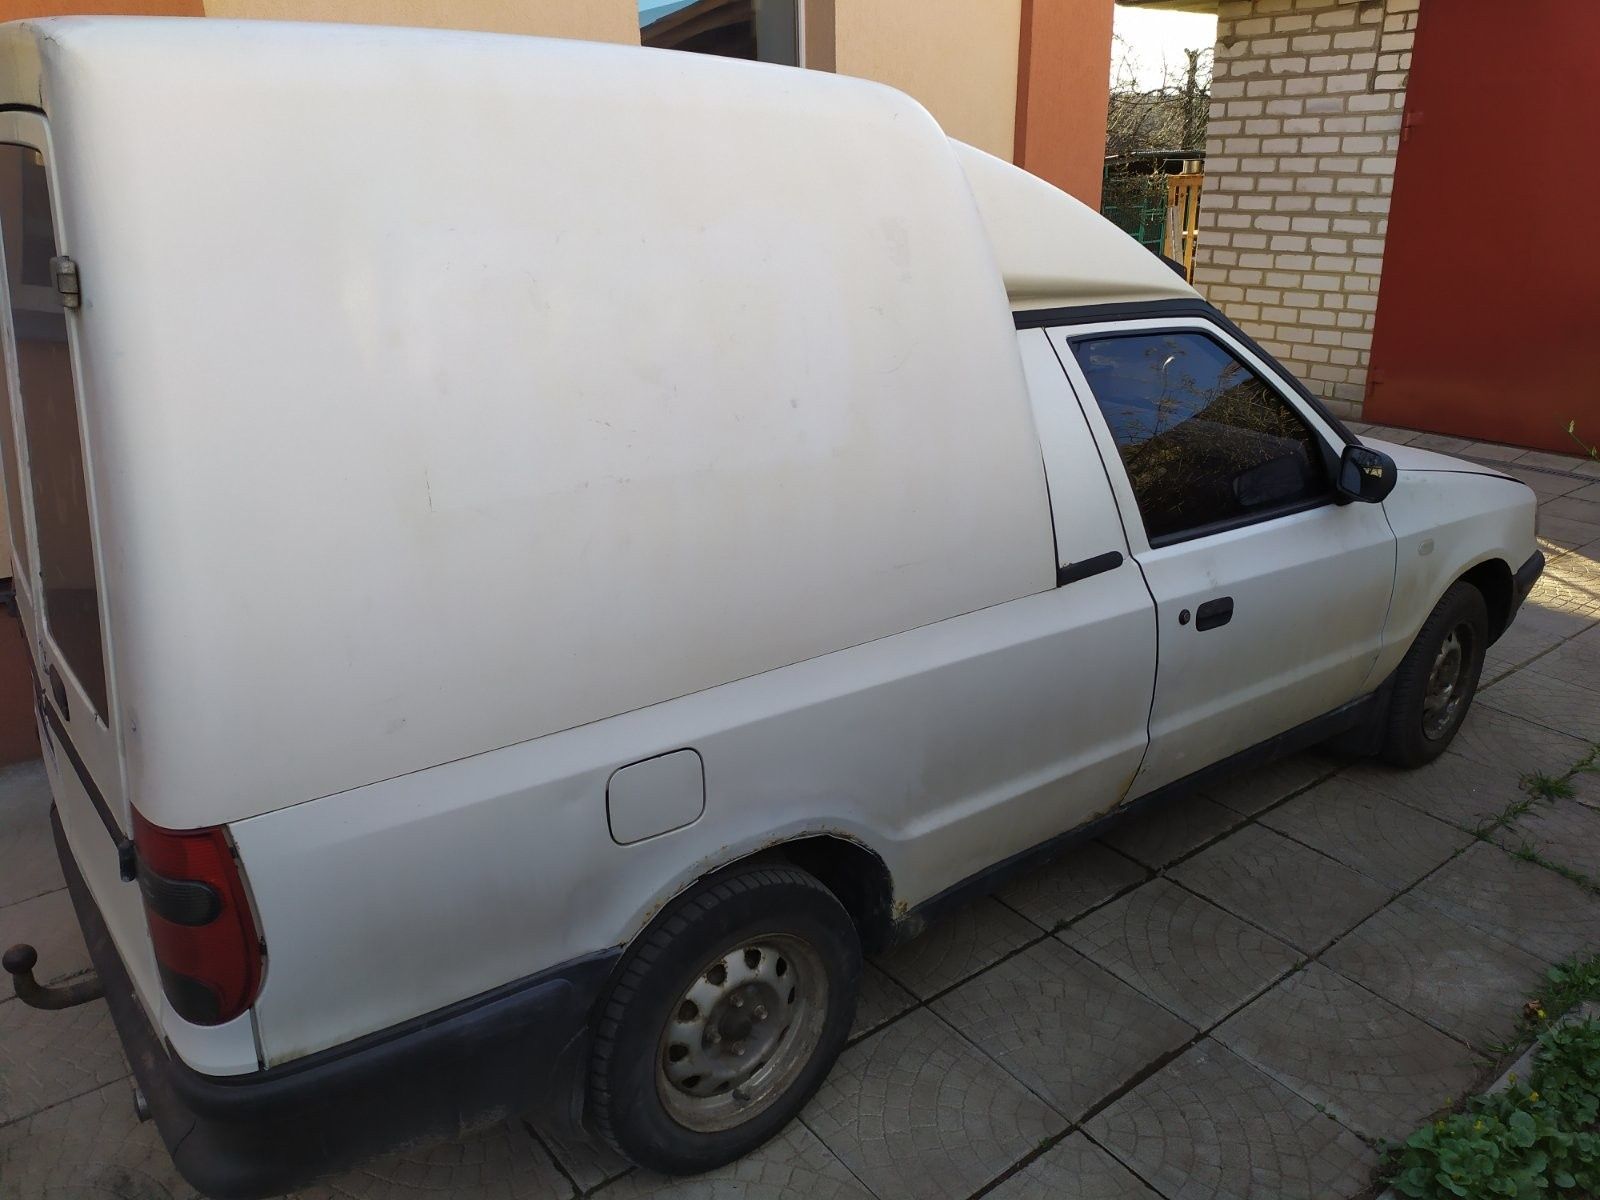 Автомобиль Skoda Felicia 1,3 mpi пикап белый на ходу газ/бензин целый